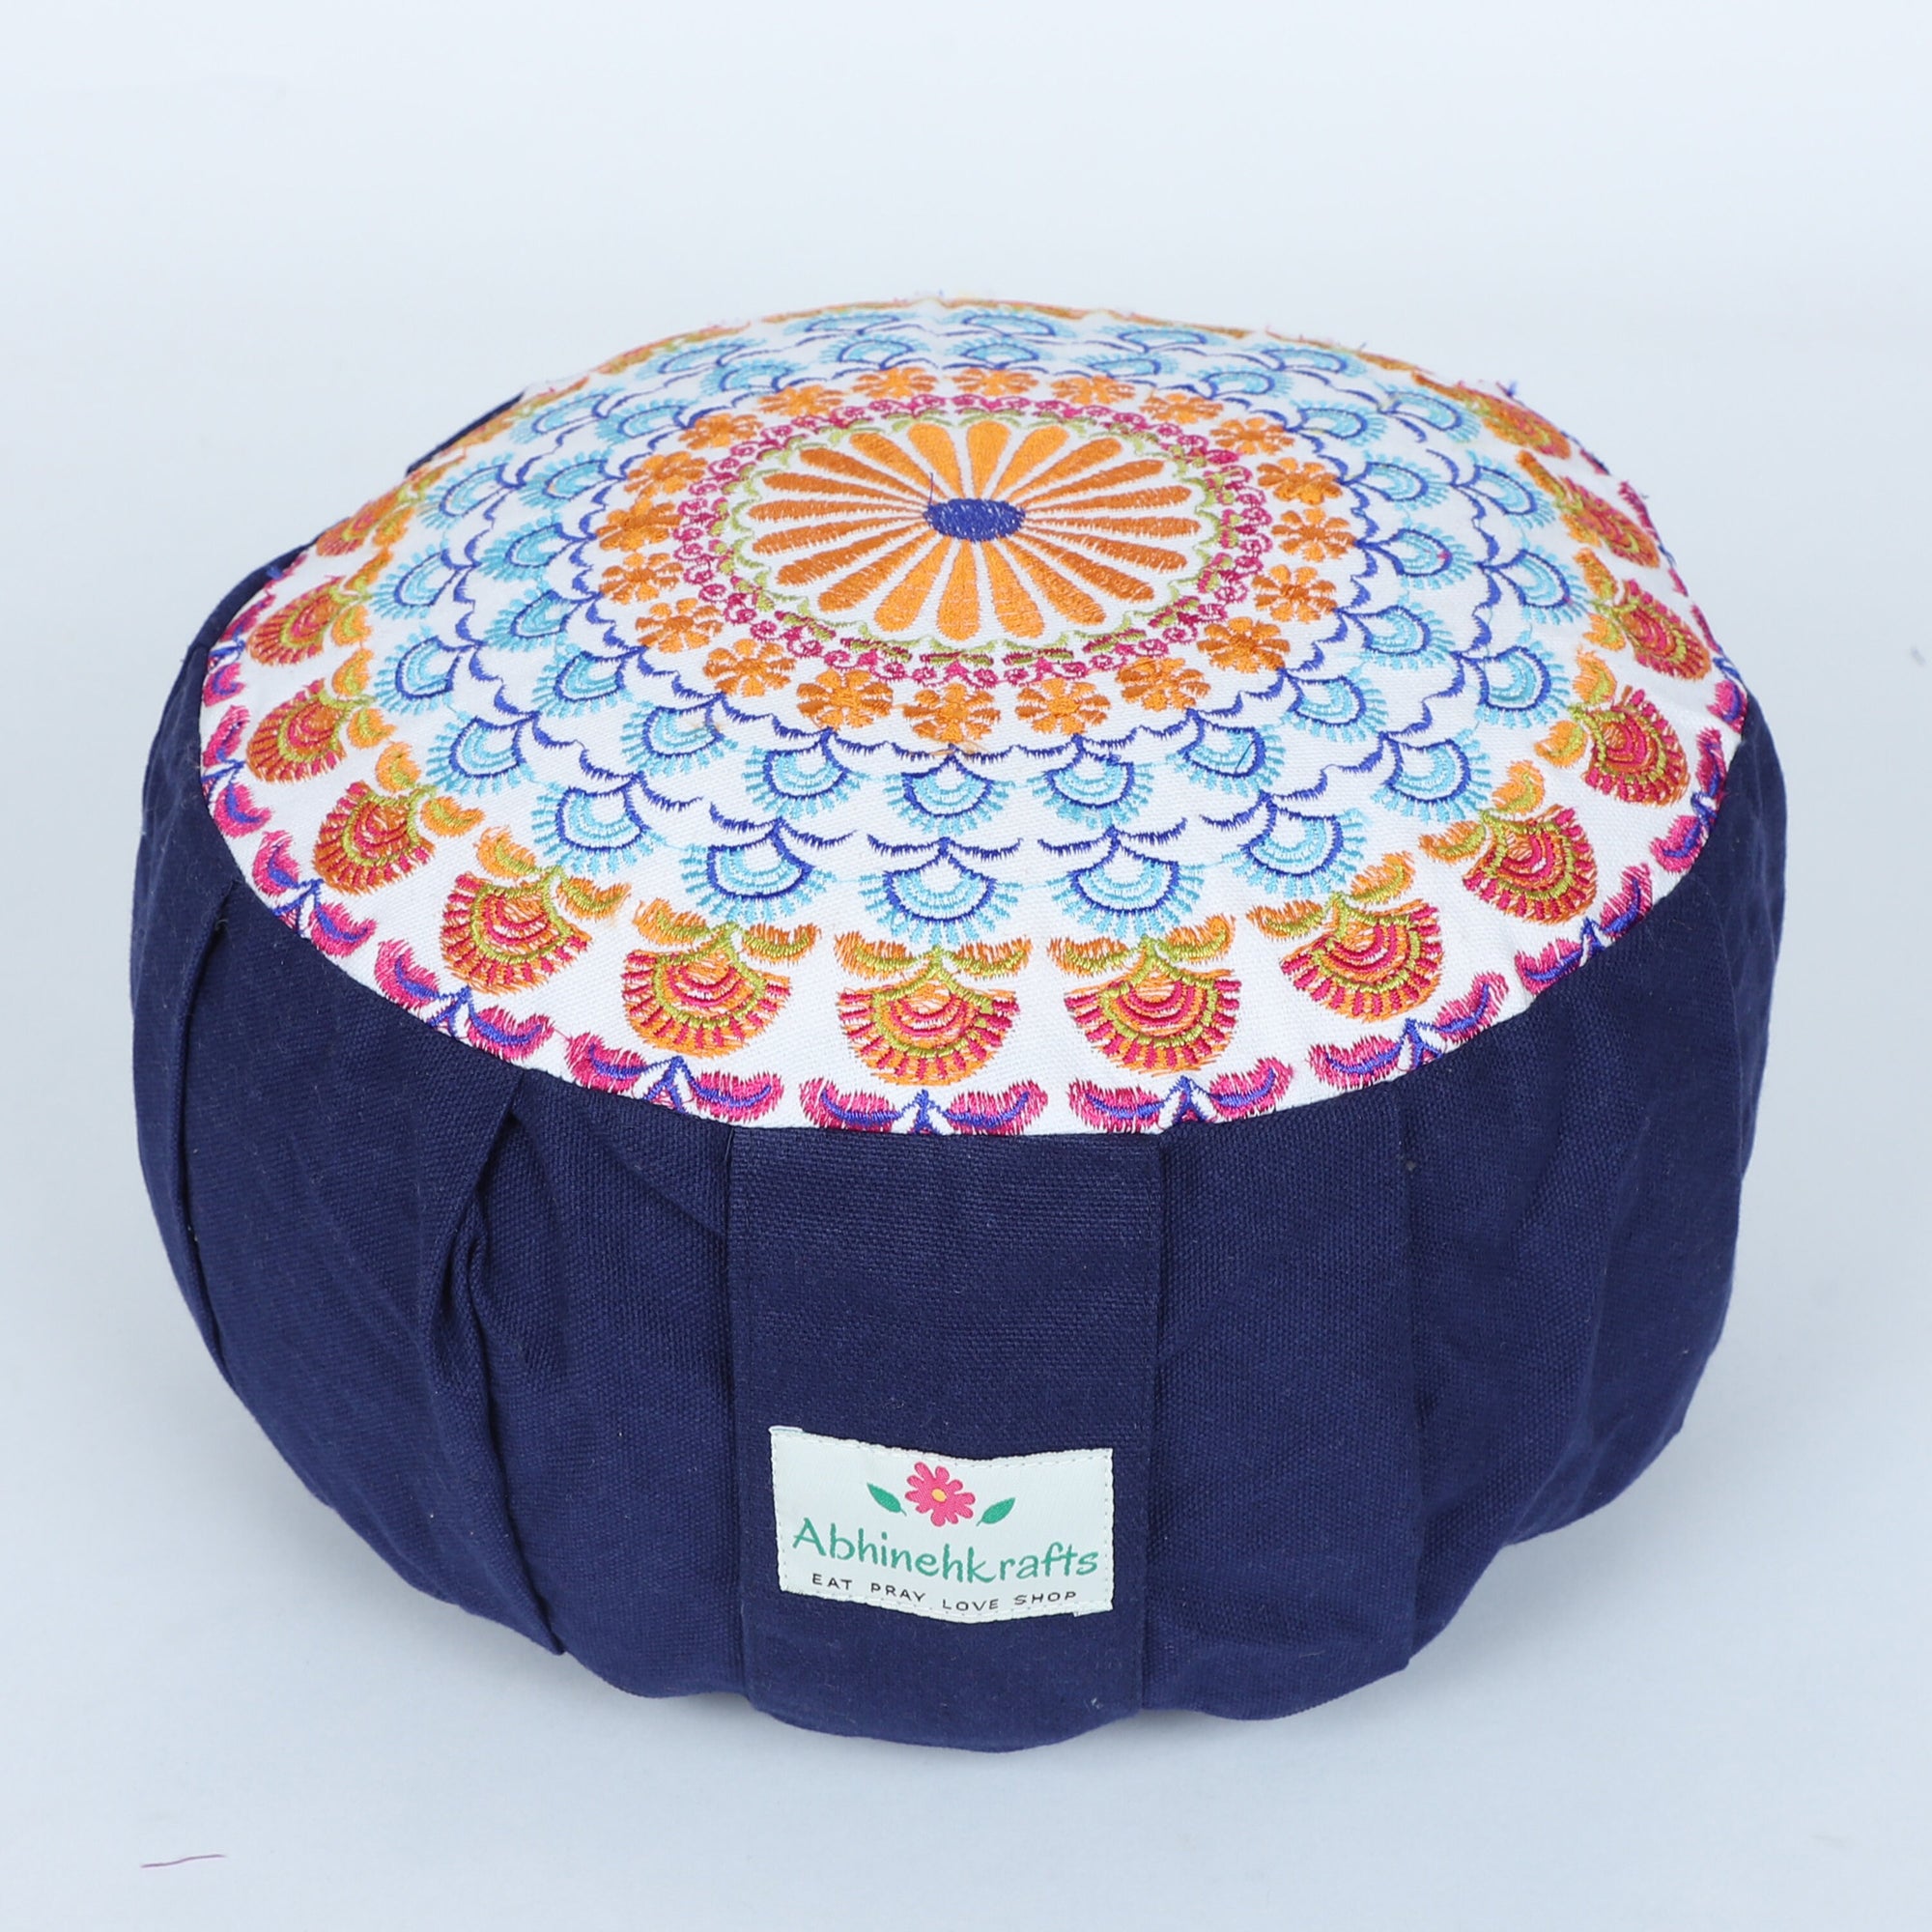 Embroidered Round Portable Meditation Cushion, Zafu Yoga Pillow - Parvati